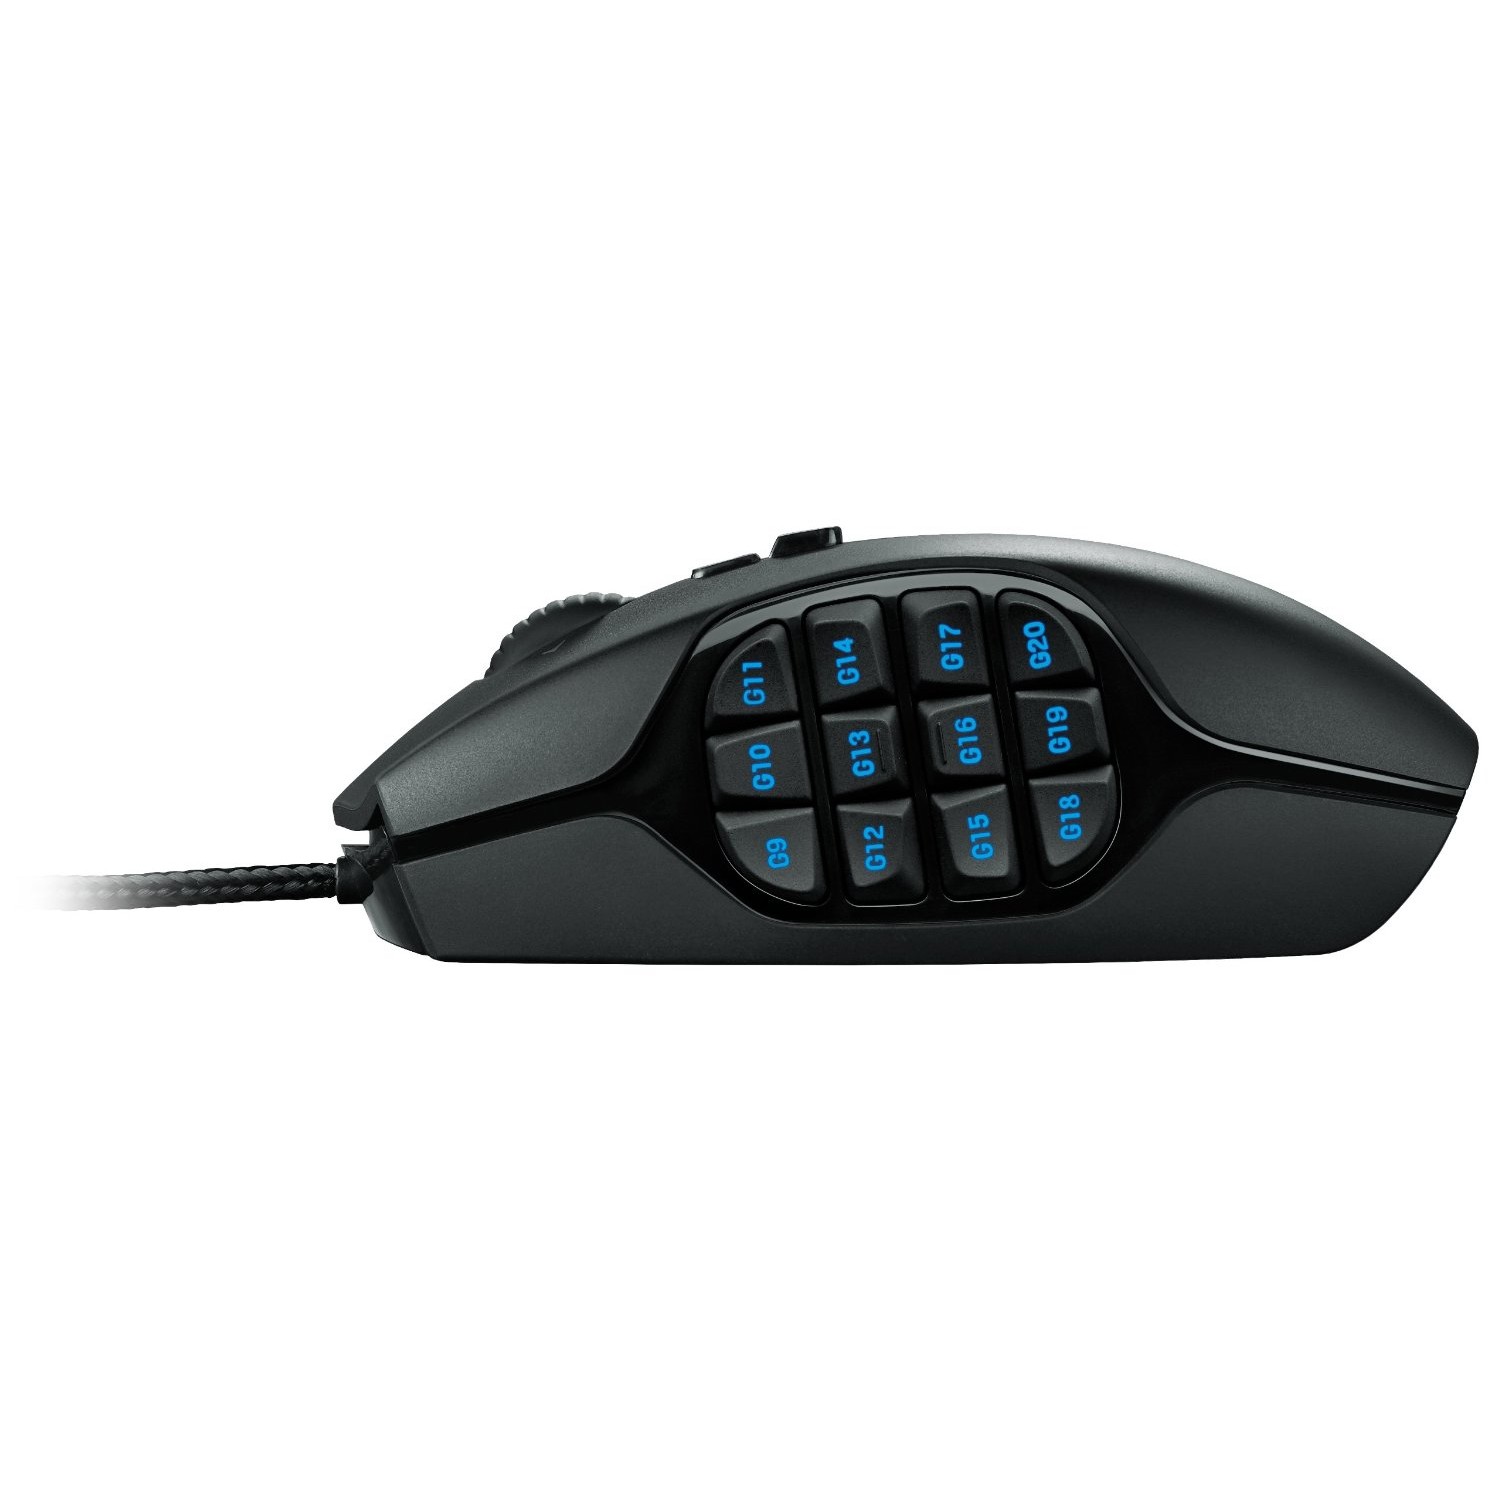 Logitech G600 MMO Black Gaming Mouse-5